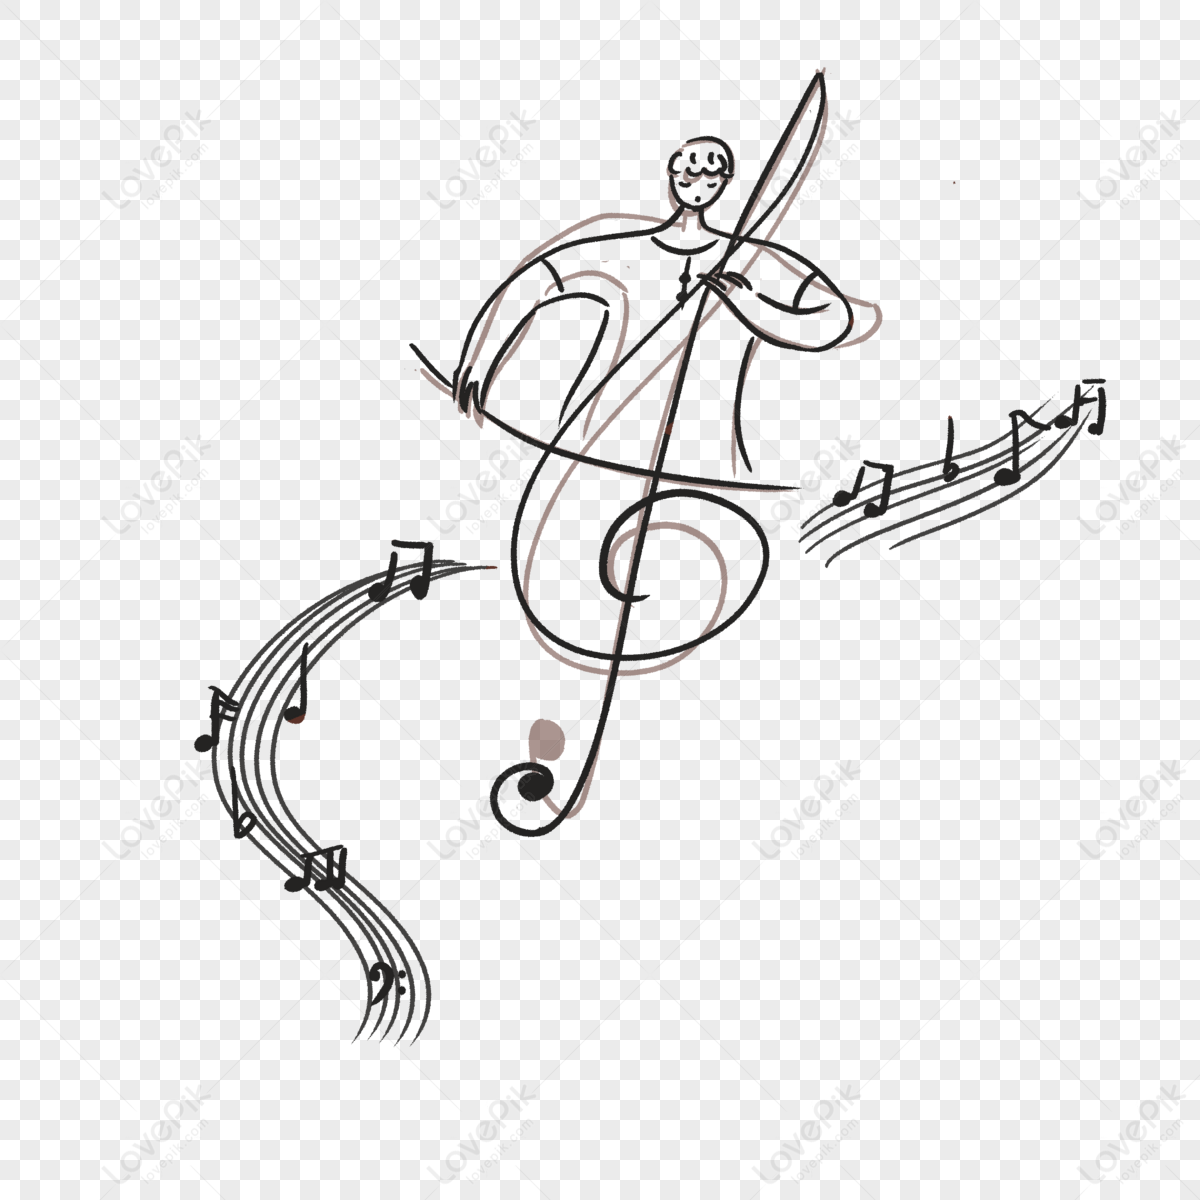 How to draw musical instruments ll Musical instruments Drawing ll Tabla,  Dhafli,Sitar,violin, Guitar - YouTube